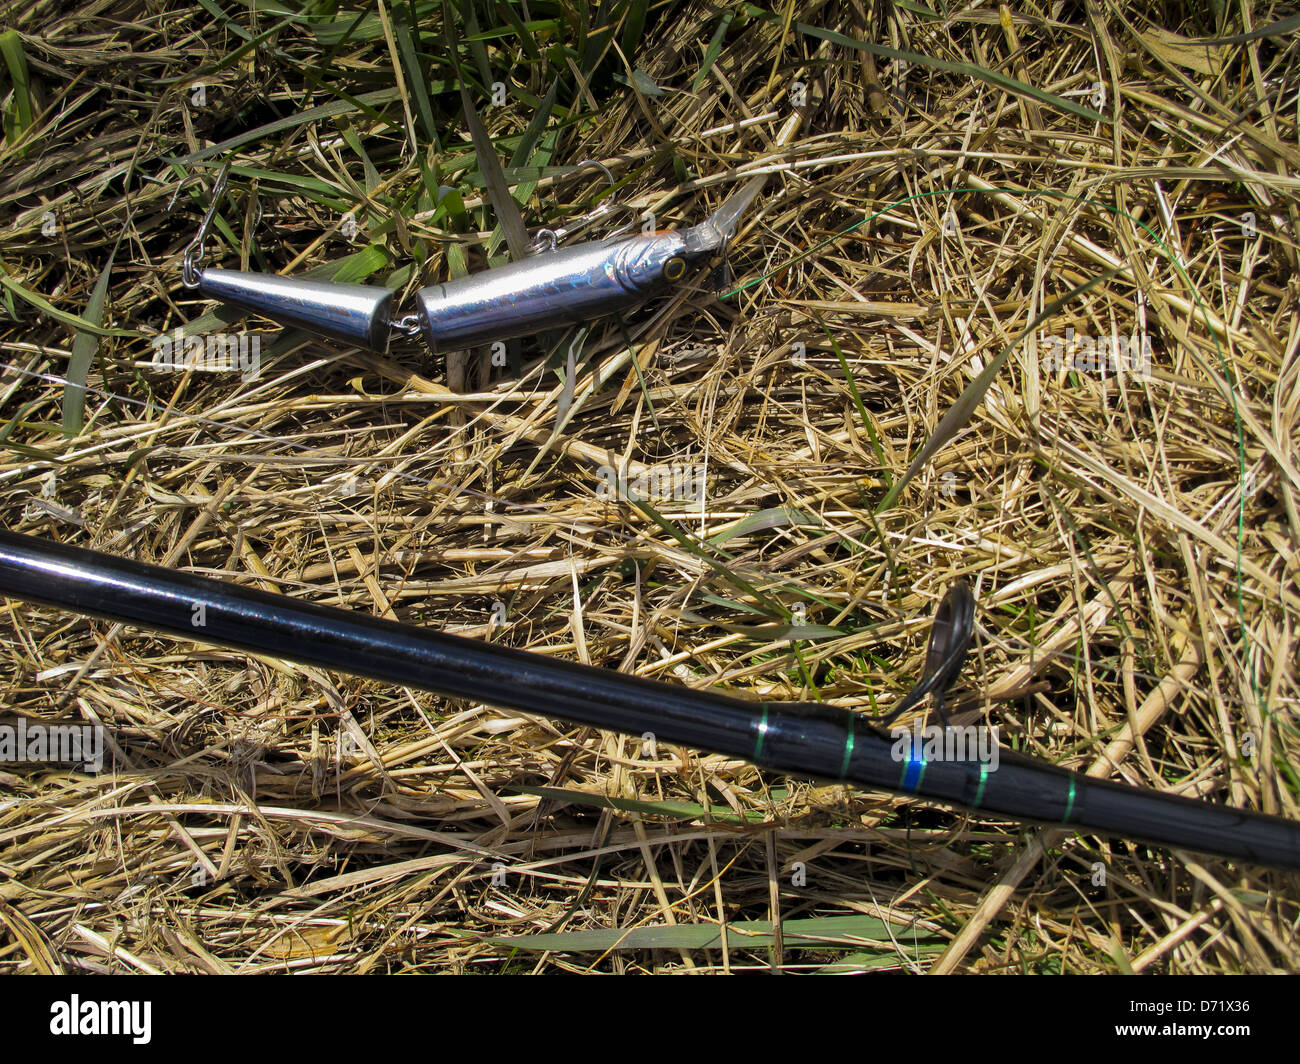 Plug fishing lure and rod on grass Stock Photo - Alamy